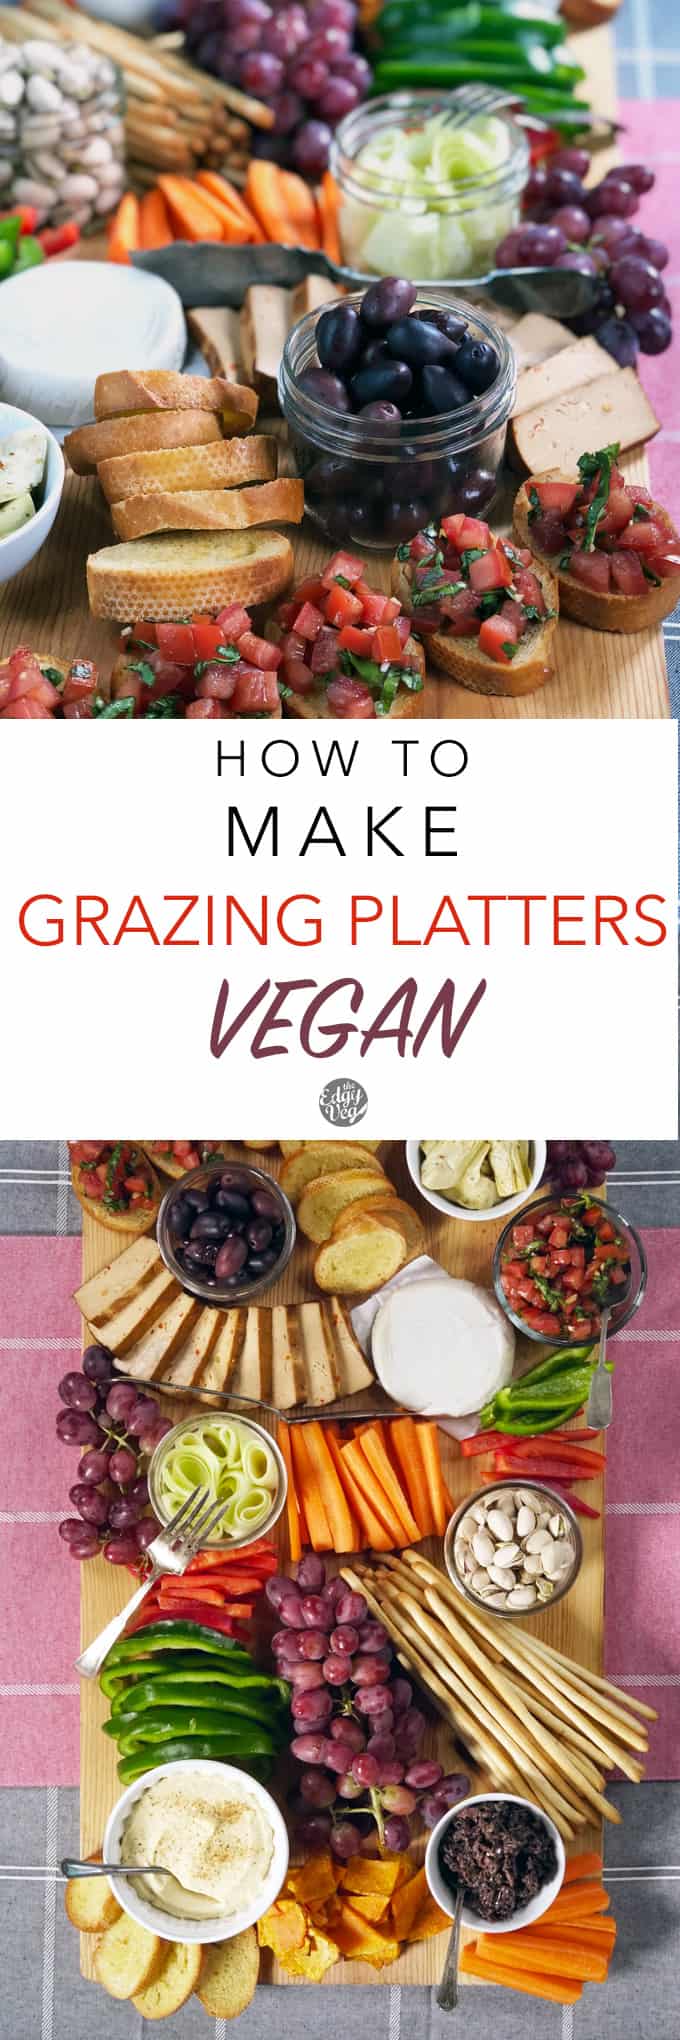 Vegan grazing platter